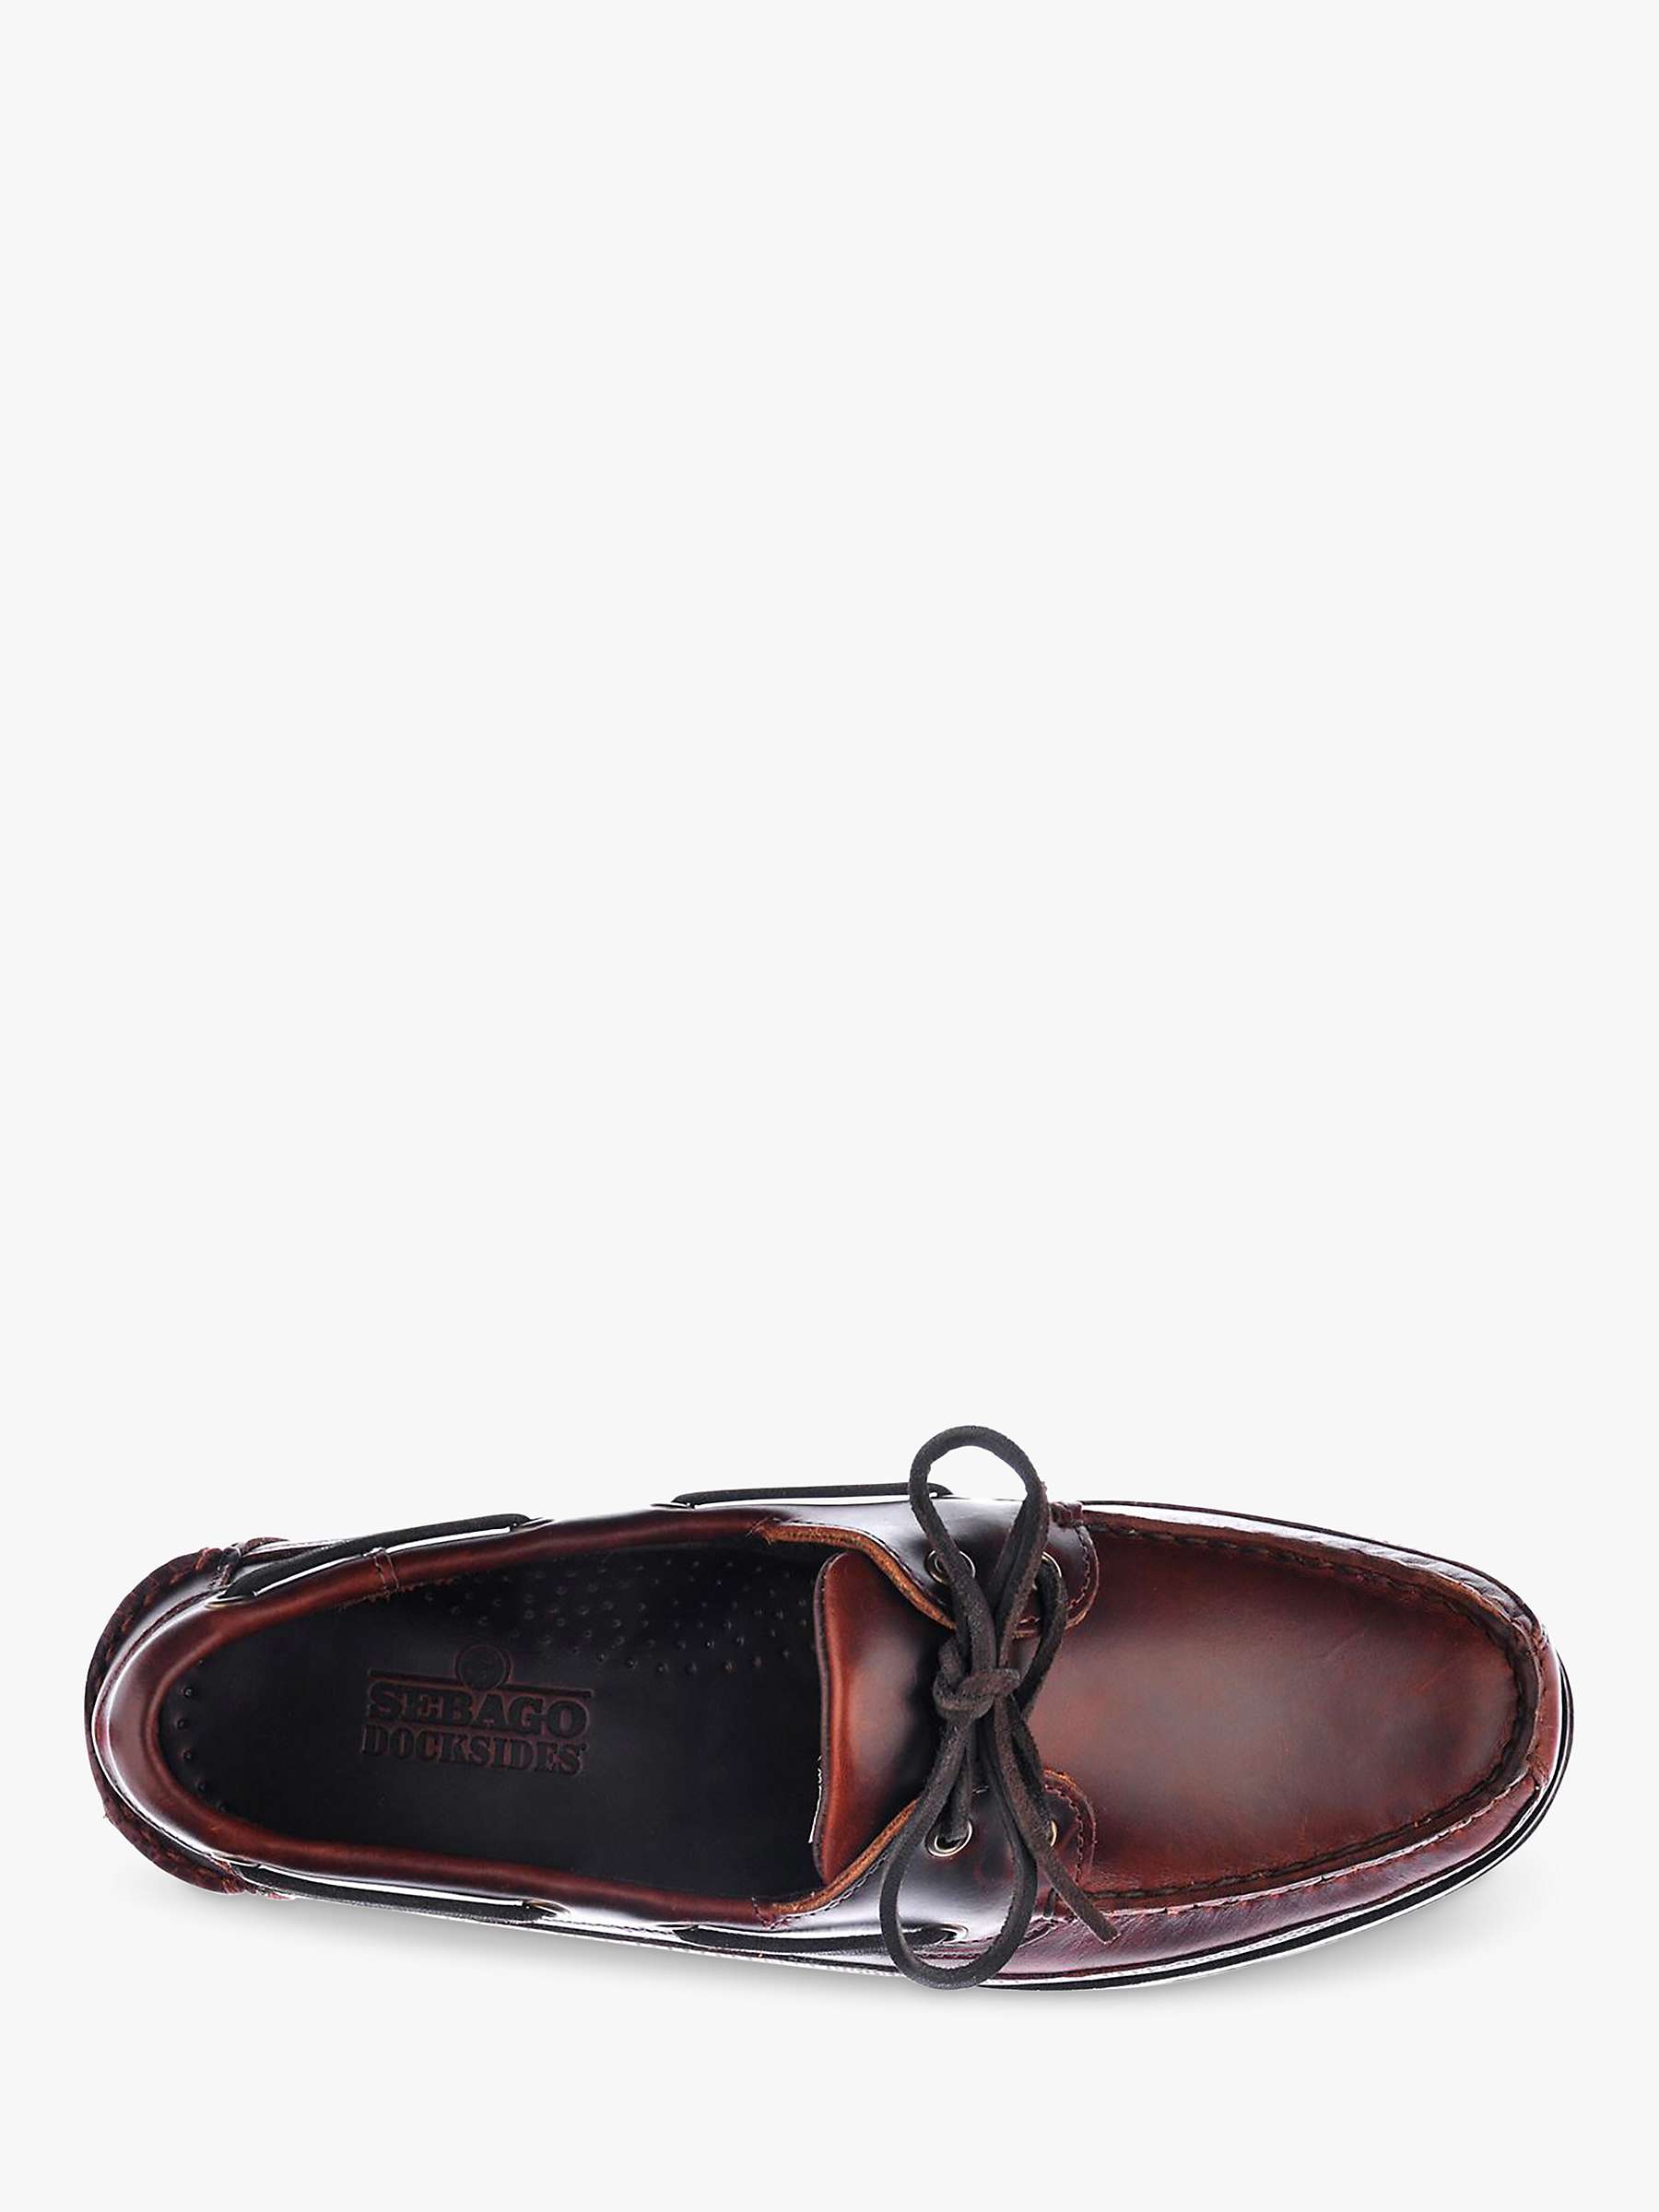 Buy Sebago Schooner Waxed Leather Boat Shoes, Brown Gum Online at johnlewis.com